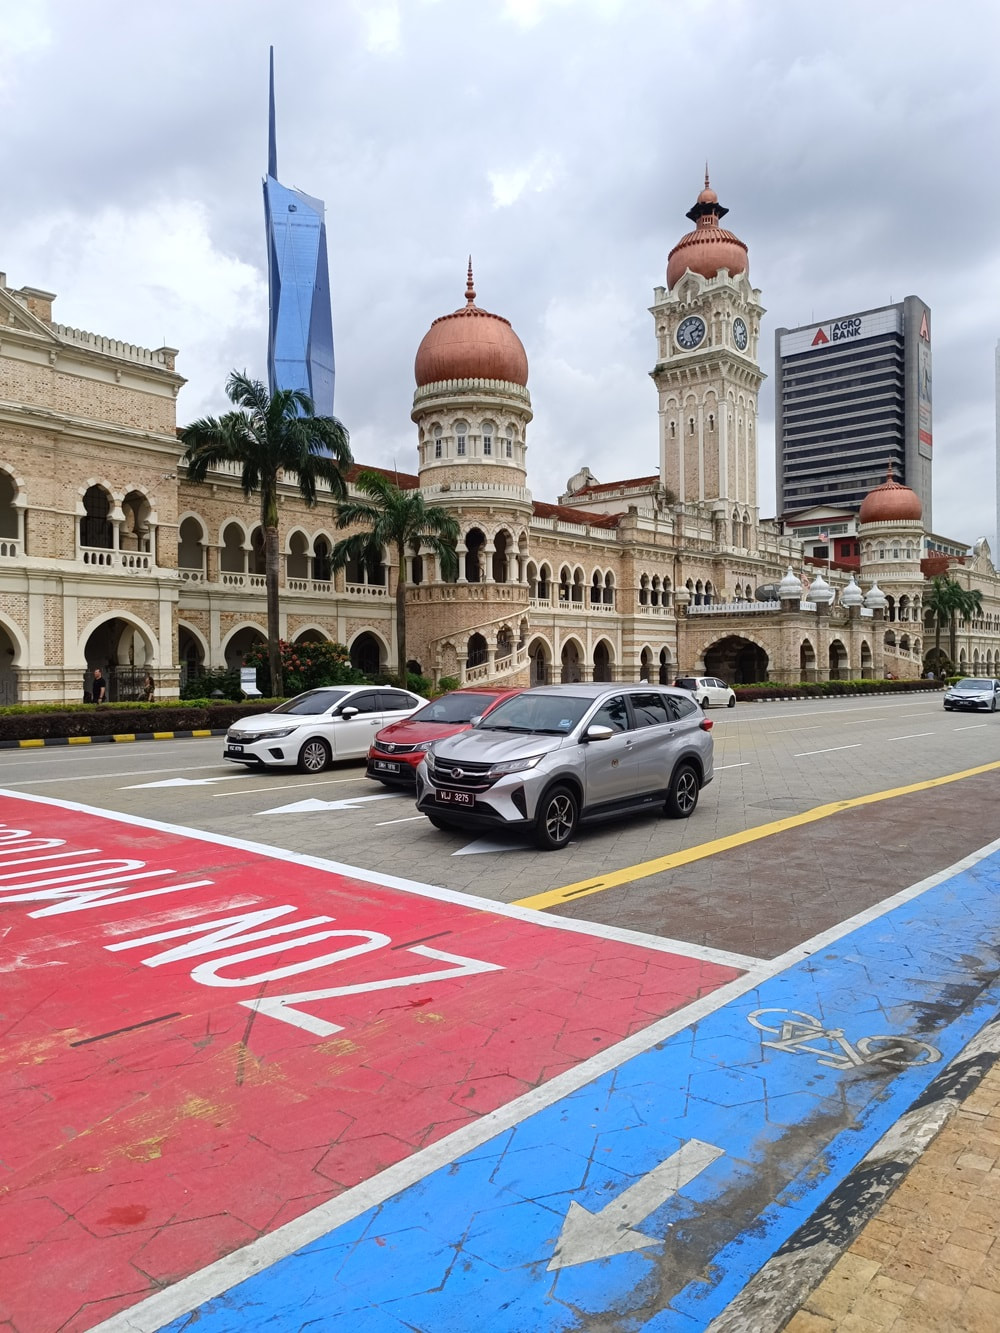 Merdeka Square in Kuala Lumpur. Photo credits Thierry Hanan Scheers.